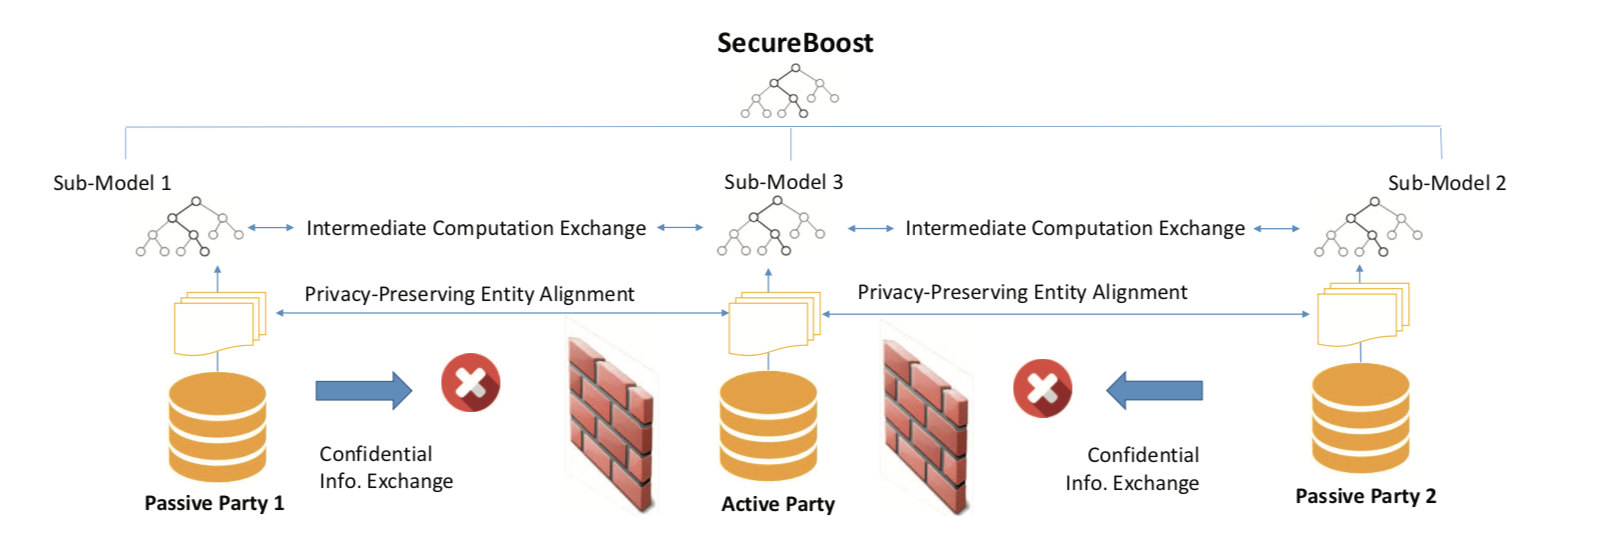 Figure 1: Framework of Federated SecureBoost